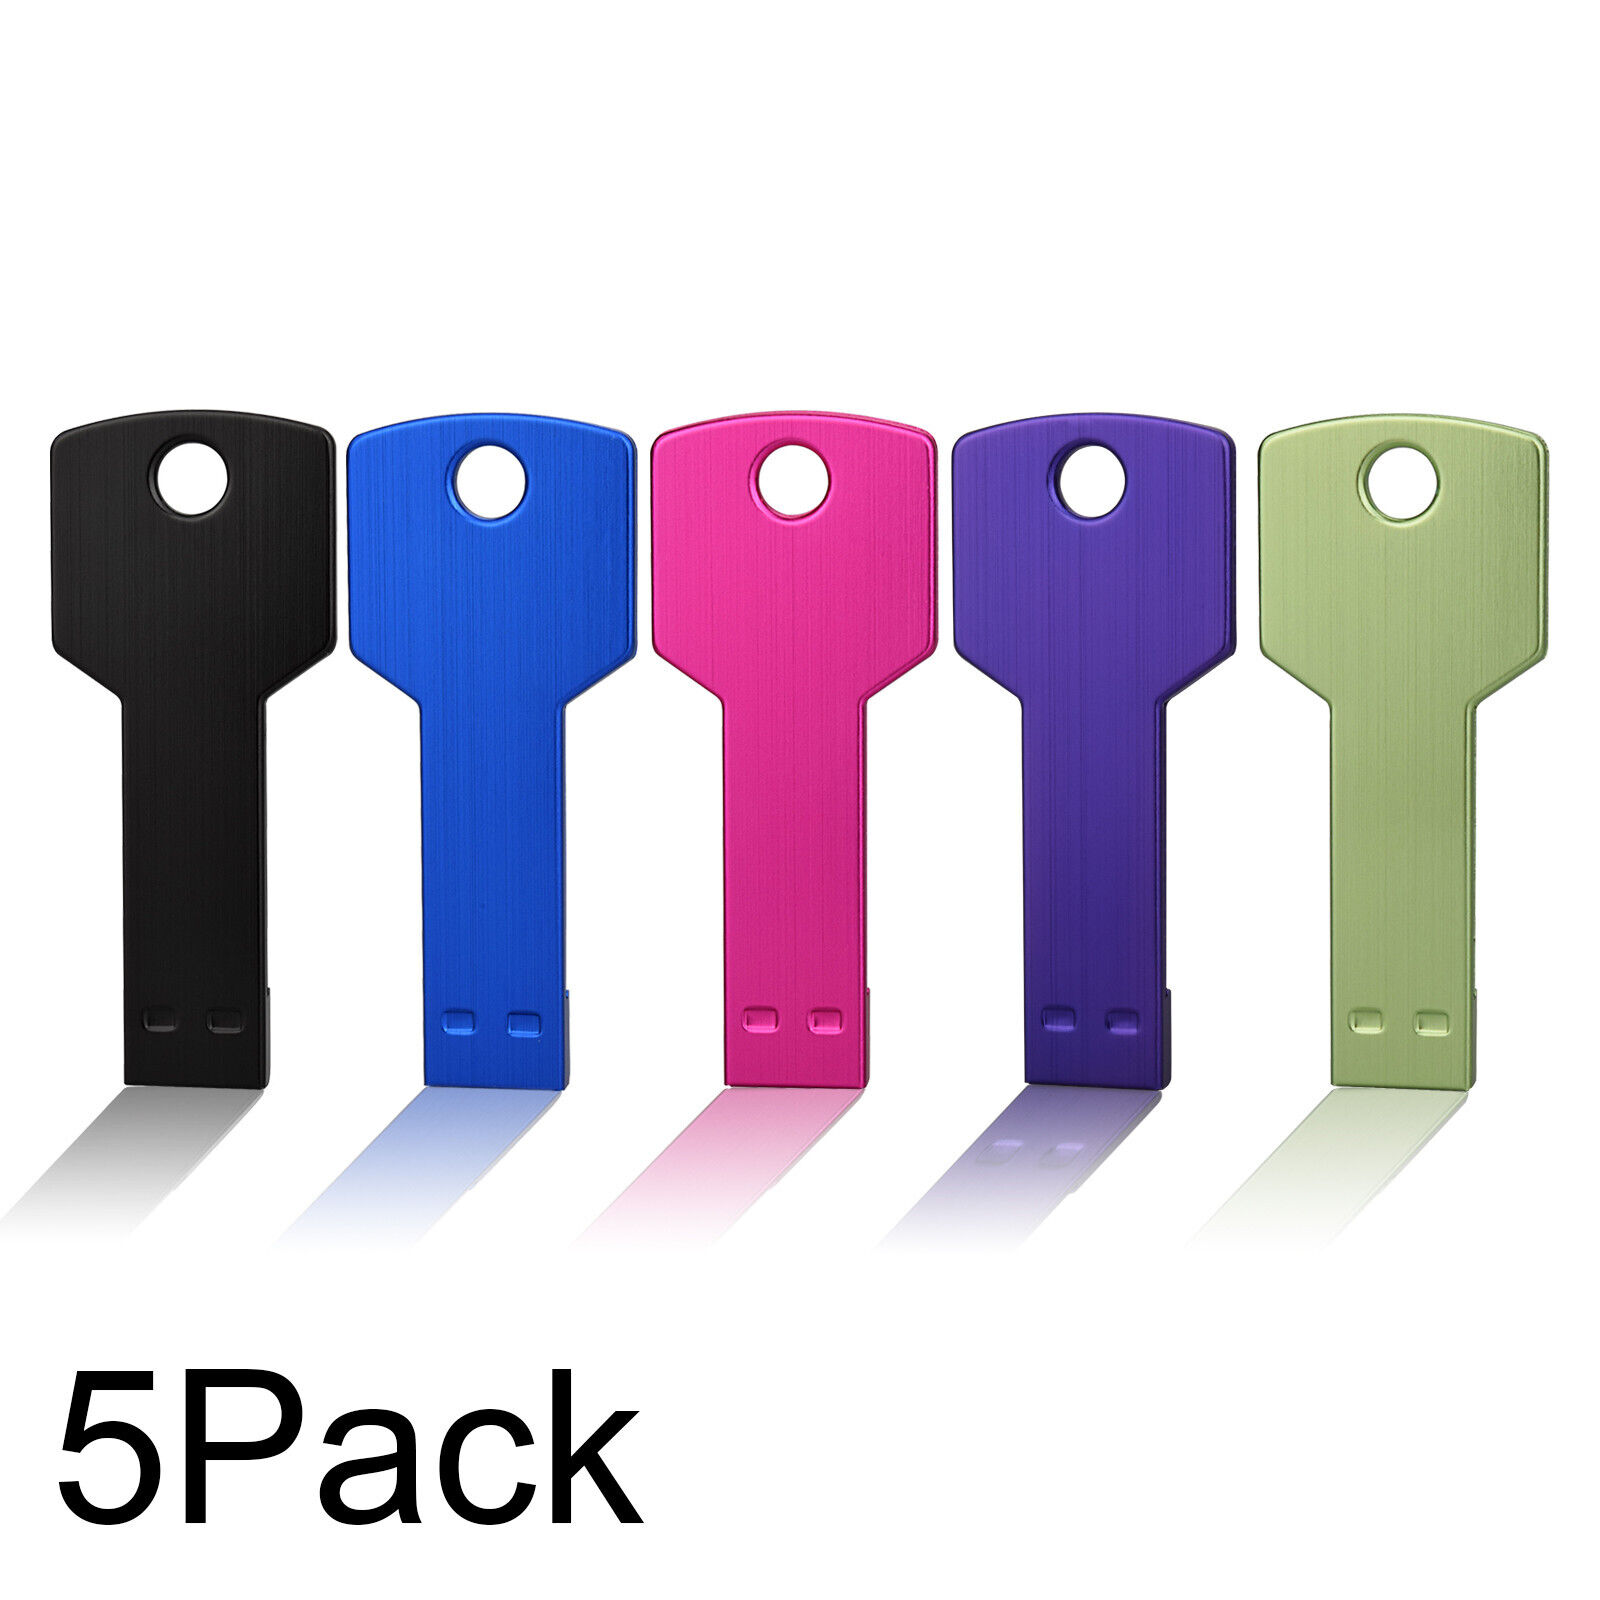 Lot 5/ 10 Pack 2g 4g 8g 16g 32g USB 2.0 Flash Drive Memory Stick Metal Key Style